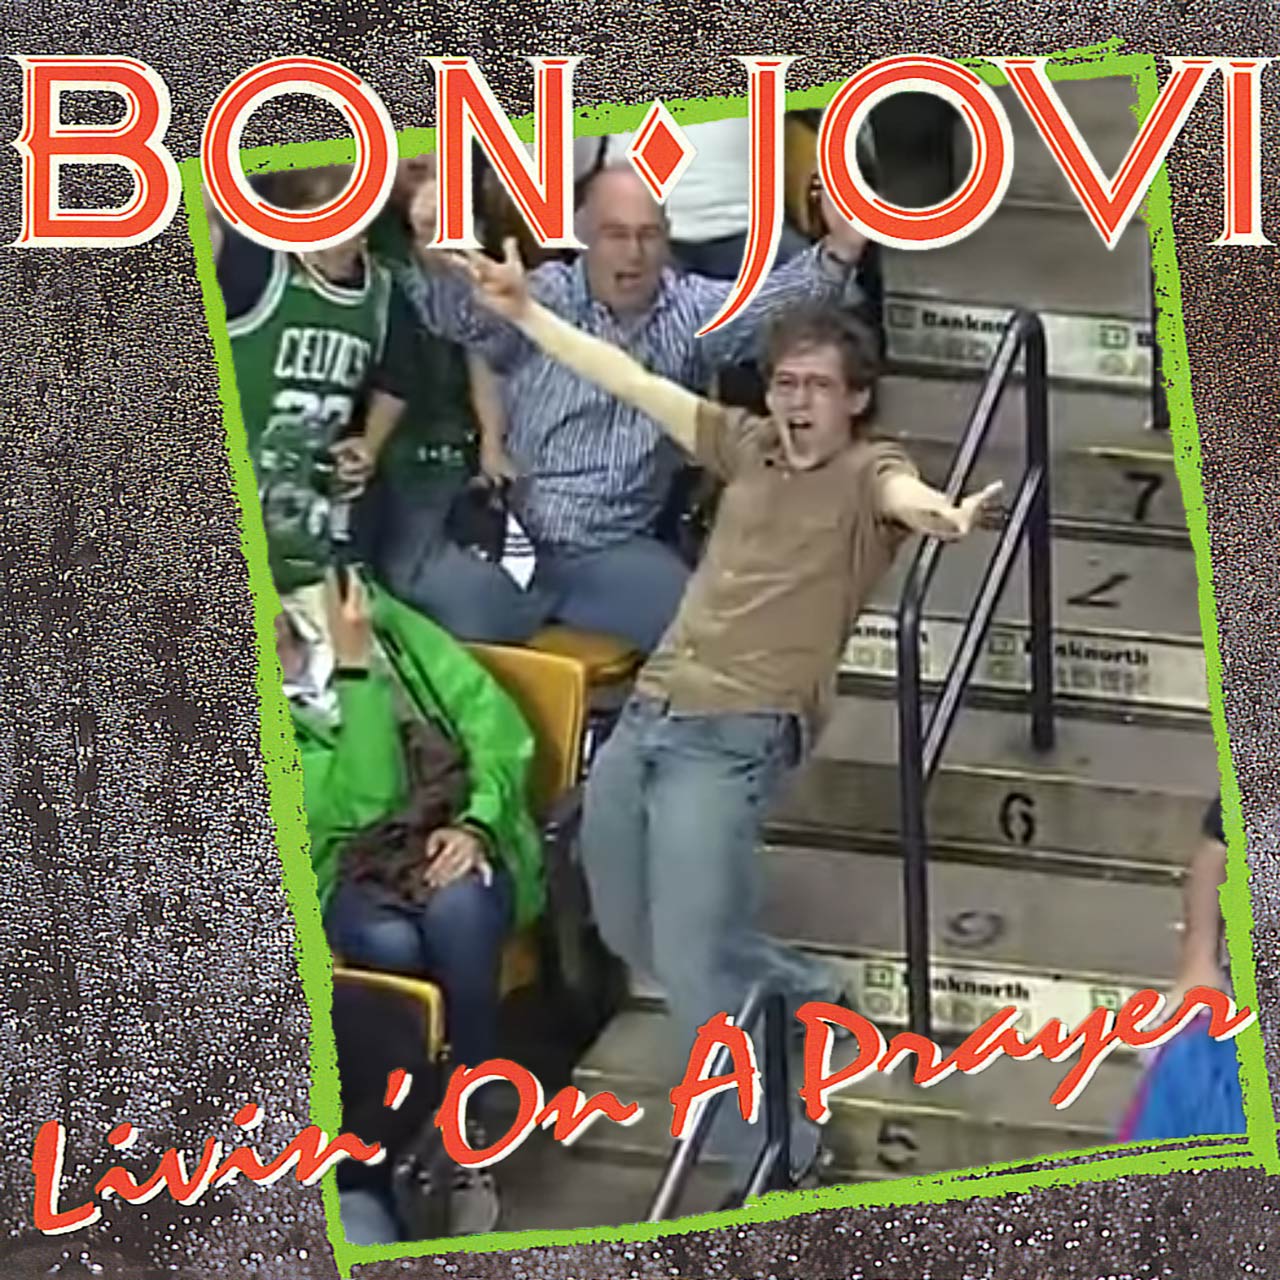 Celtics Fan Sings Along To Bon Jovi, Makes Crowd Go Wild (VIDEO)